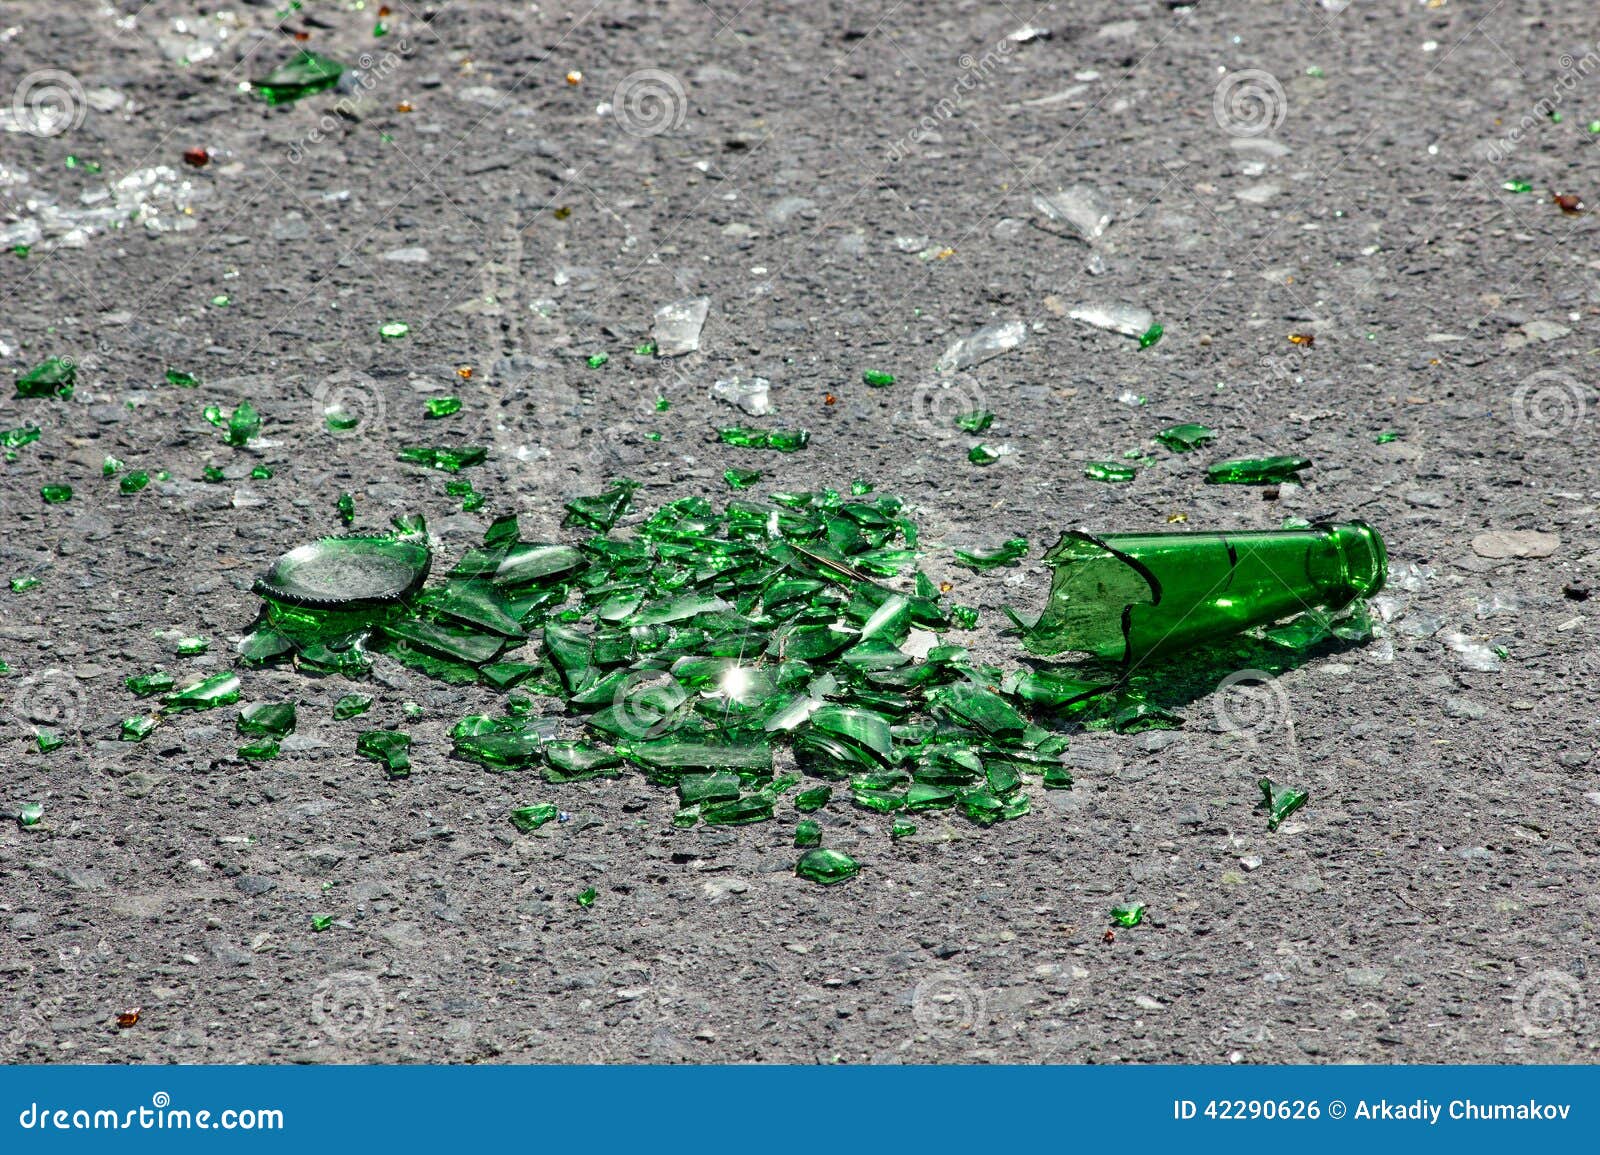 Разбитая бутылка воды. Битое зеленое бутылочное стекло. Разбитые стеклянные бутылки. Разбитая бутылка на тротуаре.